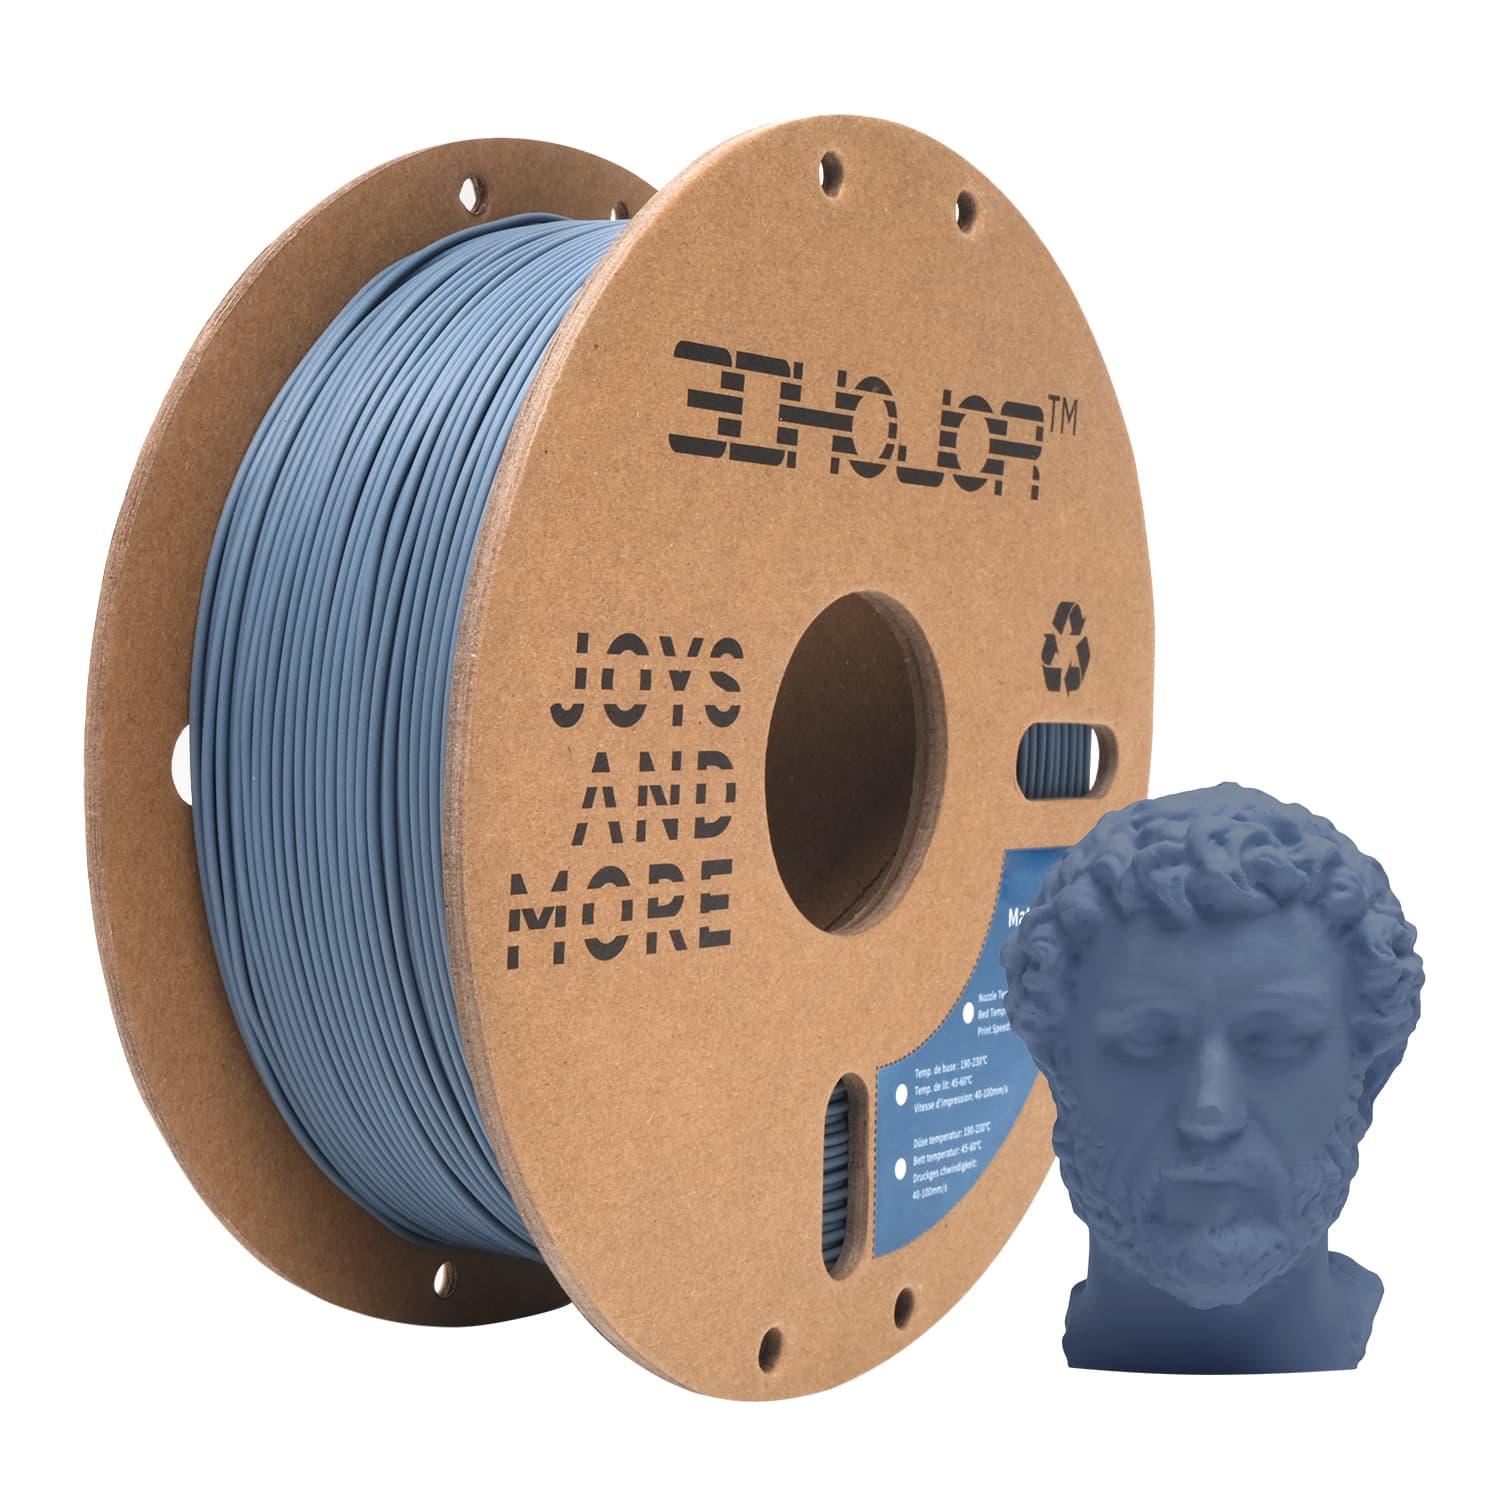 CREALITY PLA Wood 3D Printer Filament 1 KG — Acurro 3D Printers